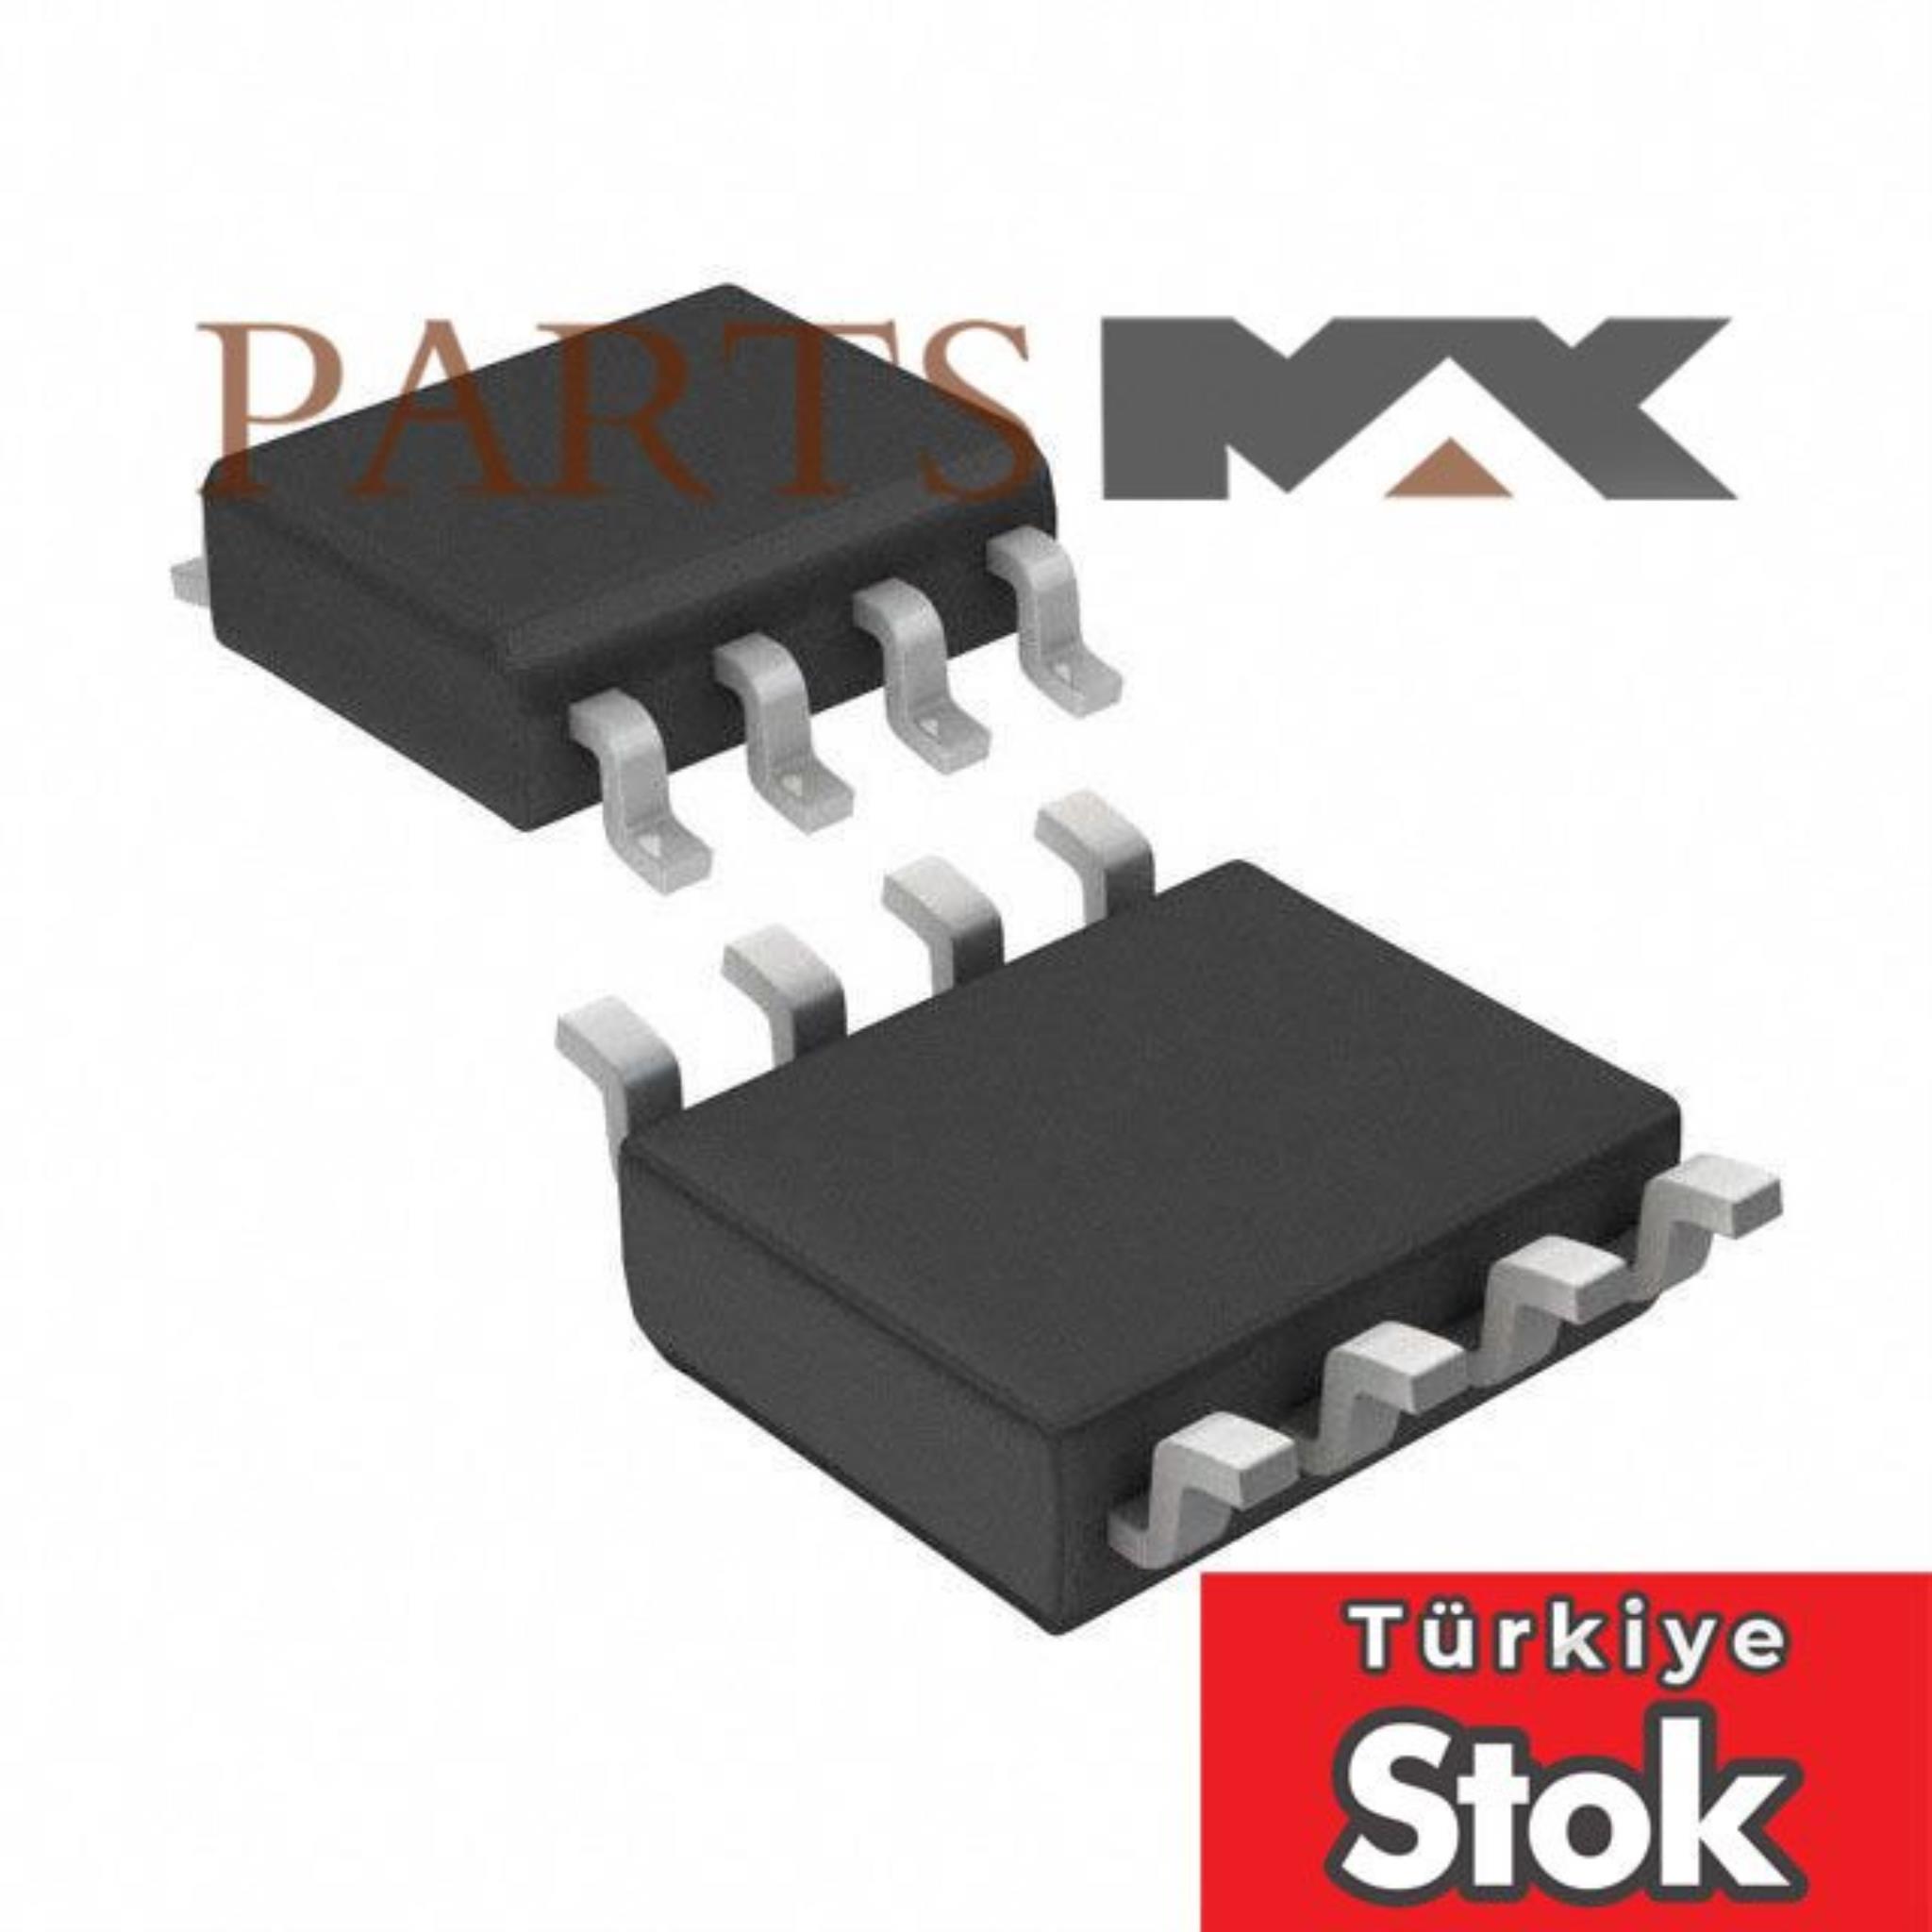 Picture of TL072ID Texas Instruments | Partsmax Türkiye